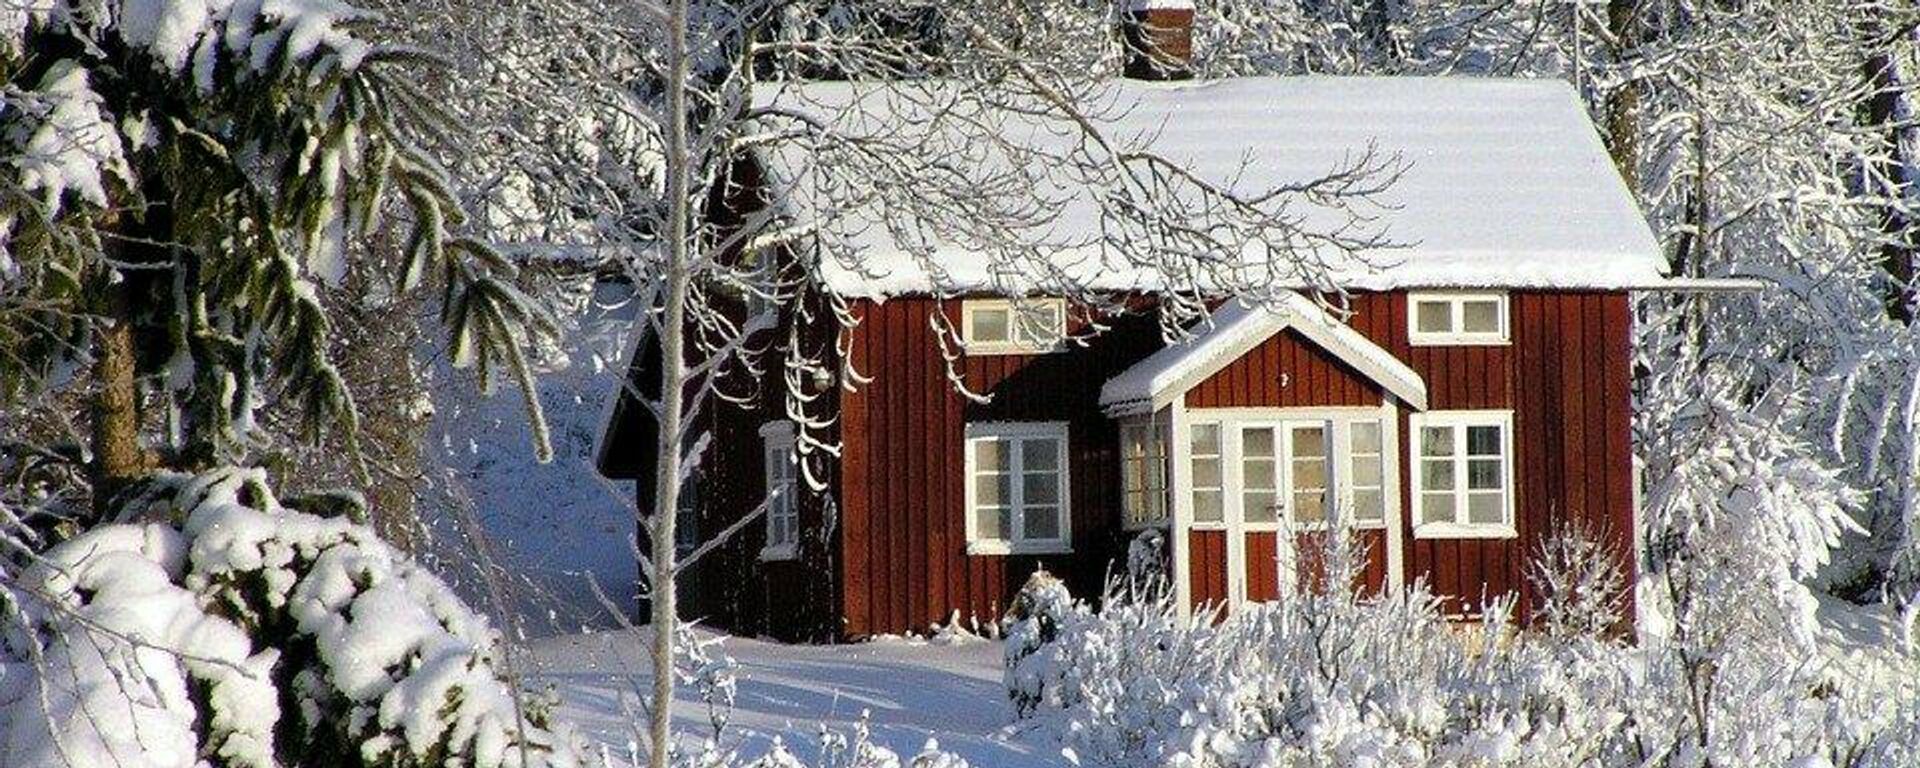 Snowy english cottage - Sputnik International, 1920, 11.01.2022